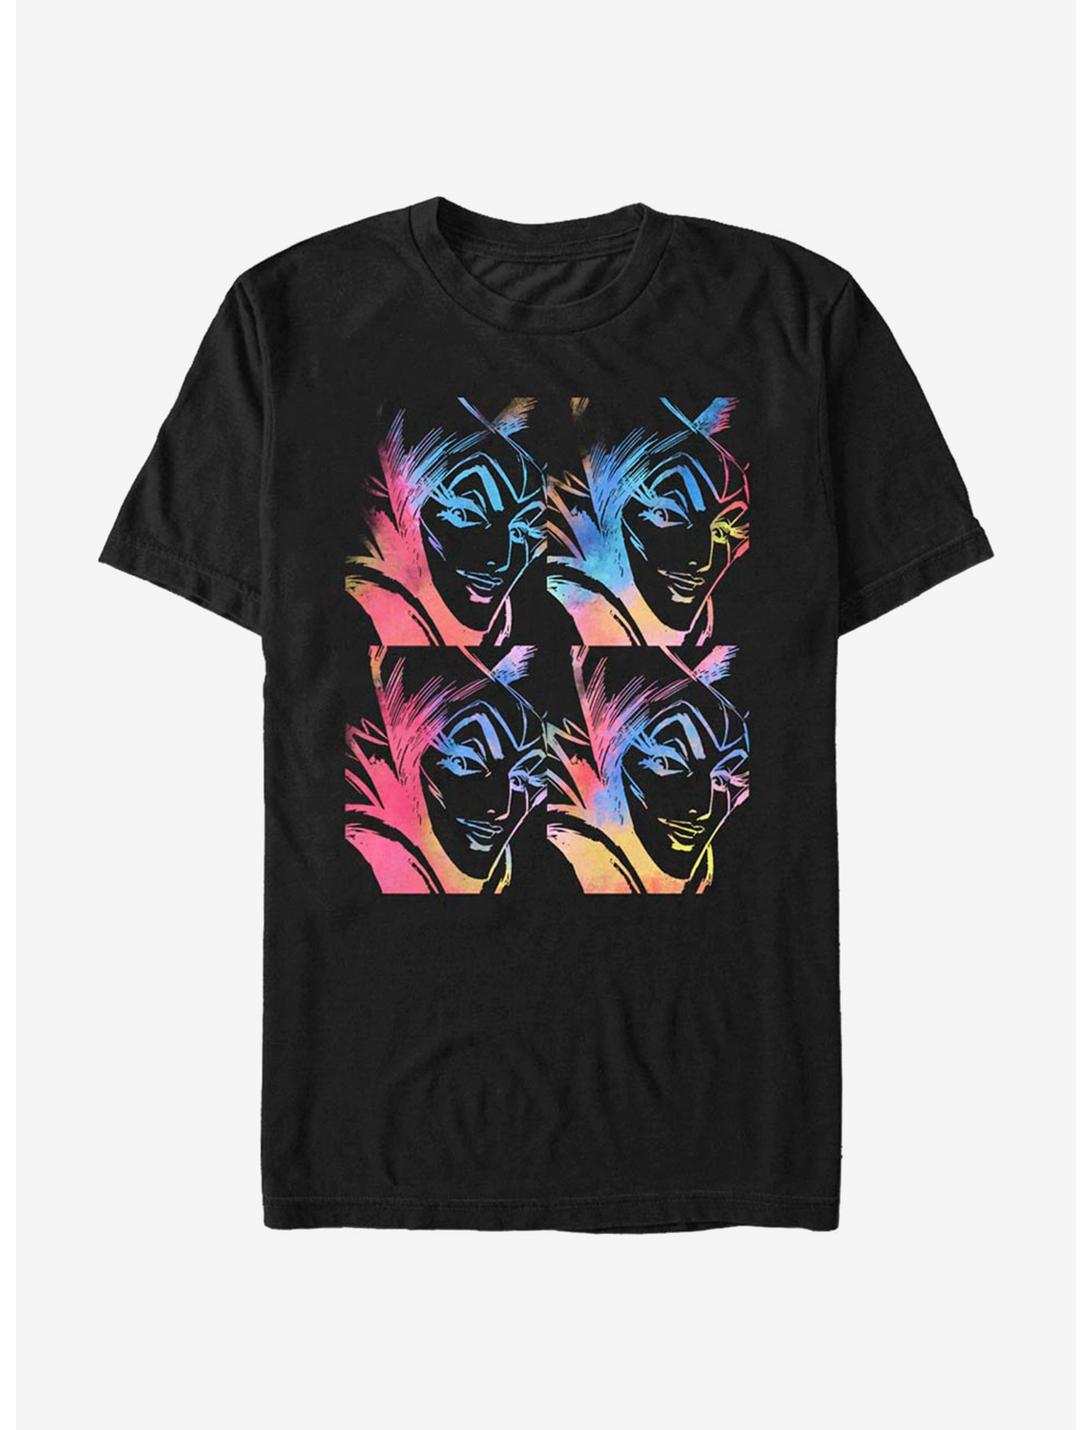 Disney Villains Pop Maleficent T-Shirt, BLACK, hi-res